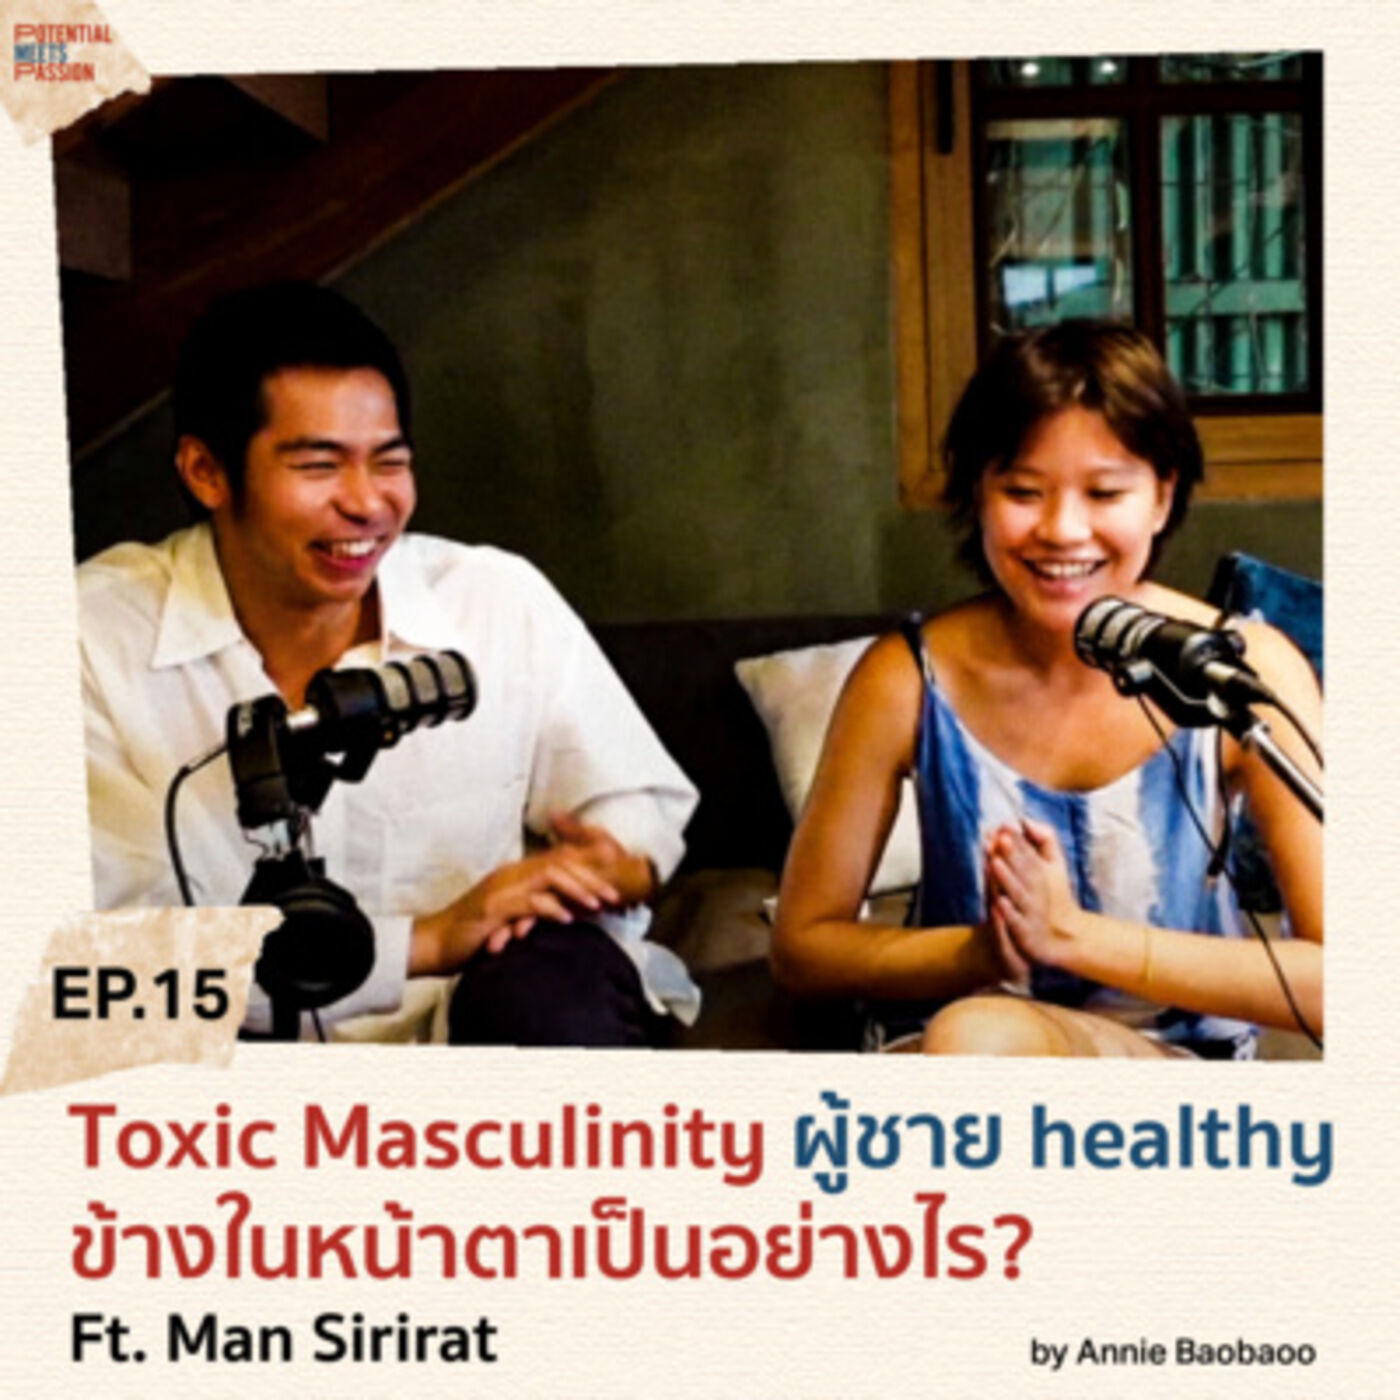 EP. 16 Toxic Masculinity ผู้ชาย healthy ข้างในหน้าตาเป็นอย่างไร? Ft. Man Sirirat